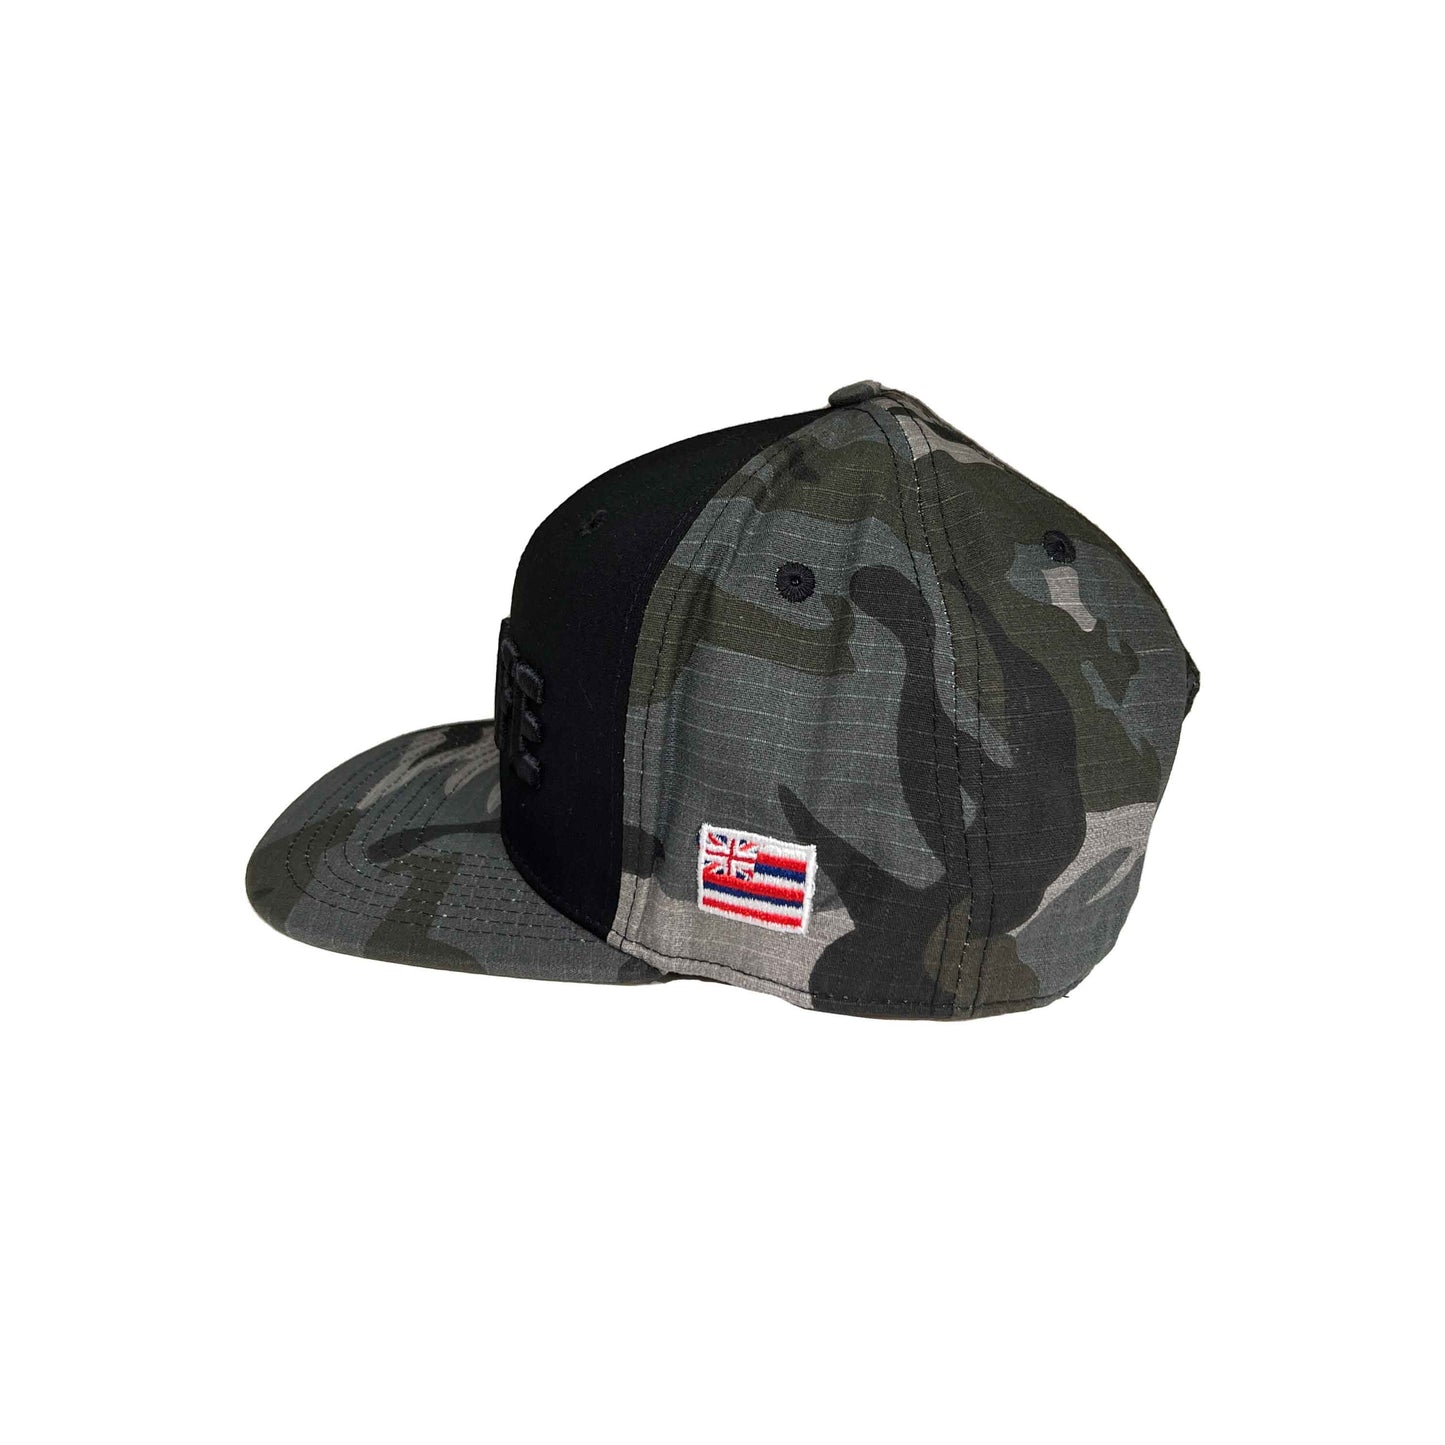 HILIFE logo Snapback hats Black Gray Camo with Black front